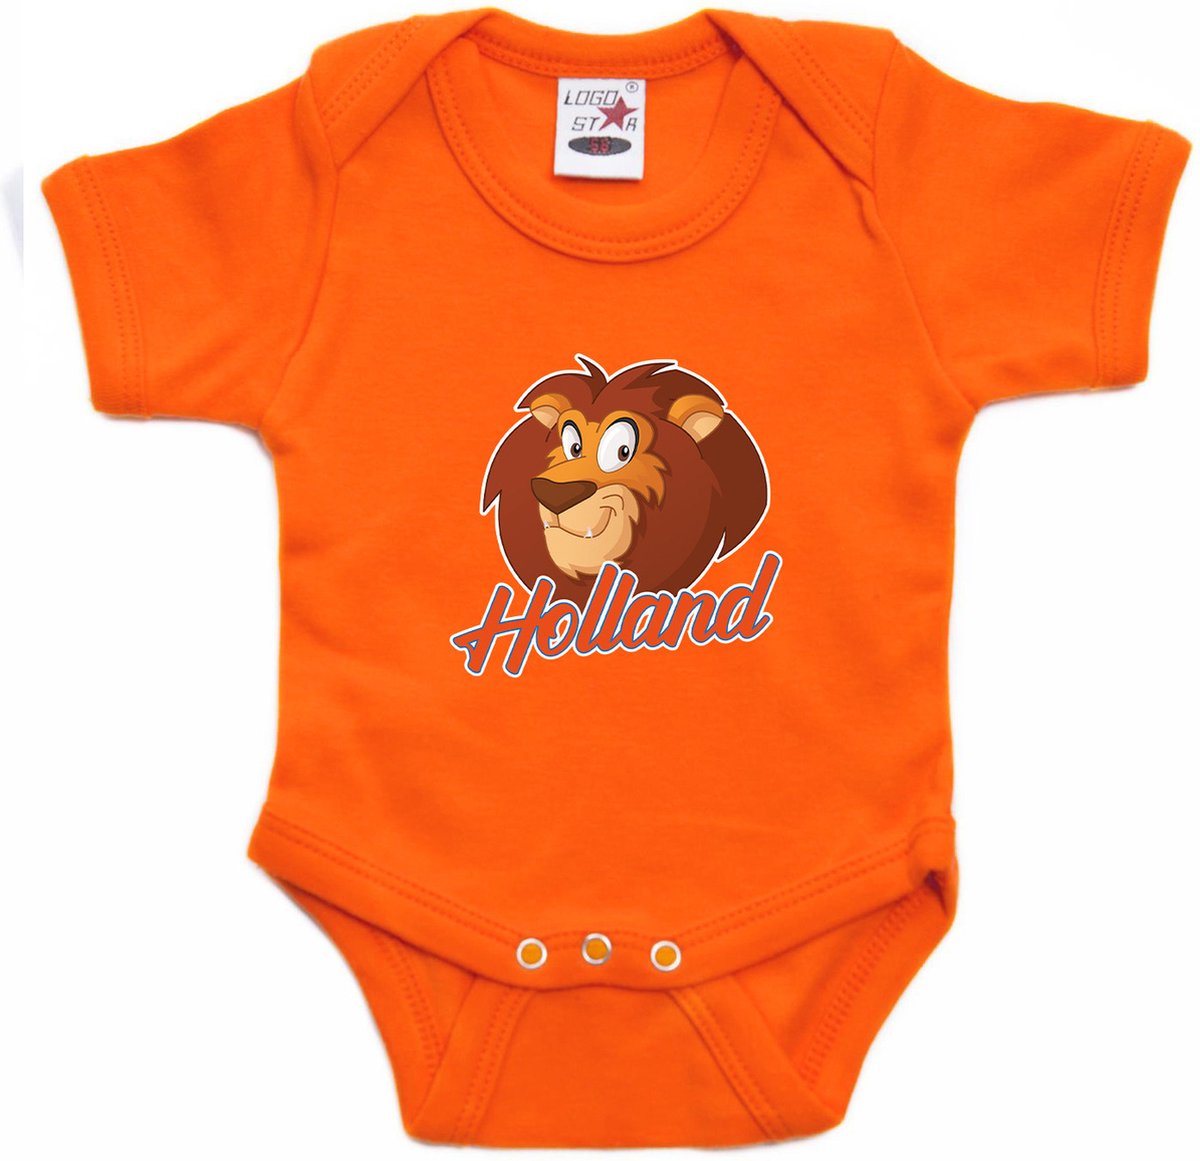 Oranje fan romper voor babys - Holland met cartoon leeuw - Nederland supporter - Koningsdag / EK / WK romper / outfit 68